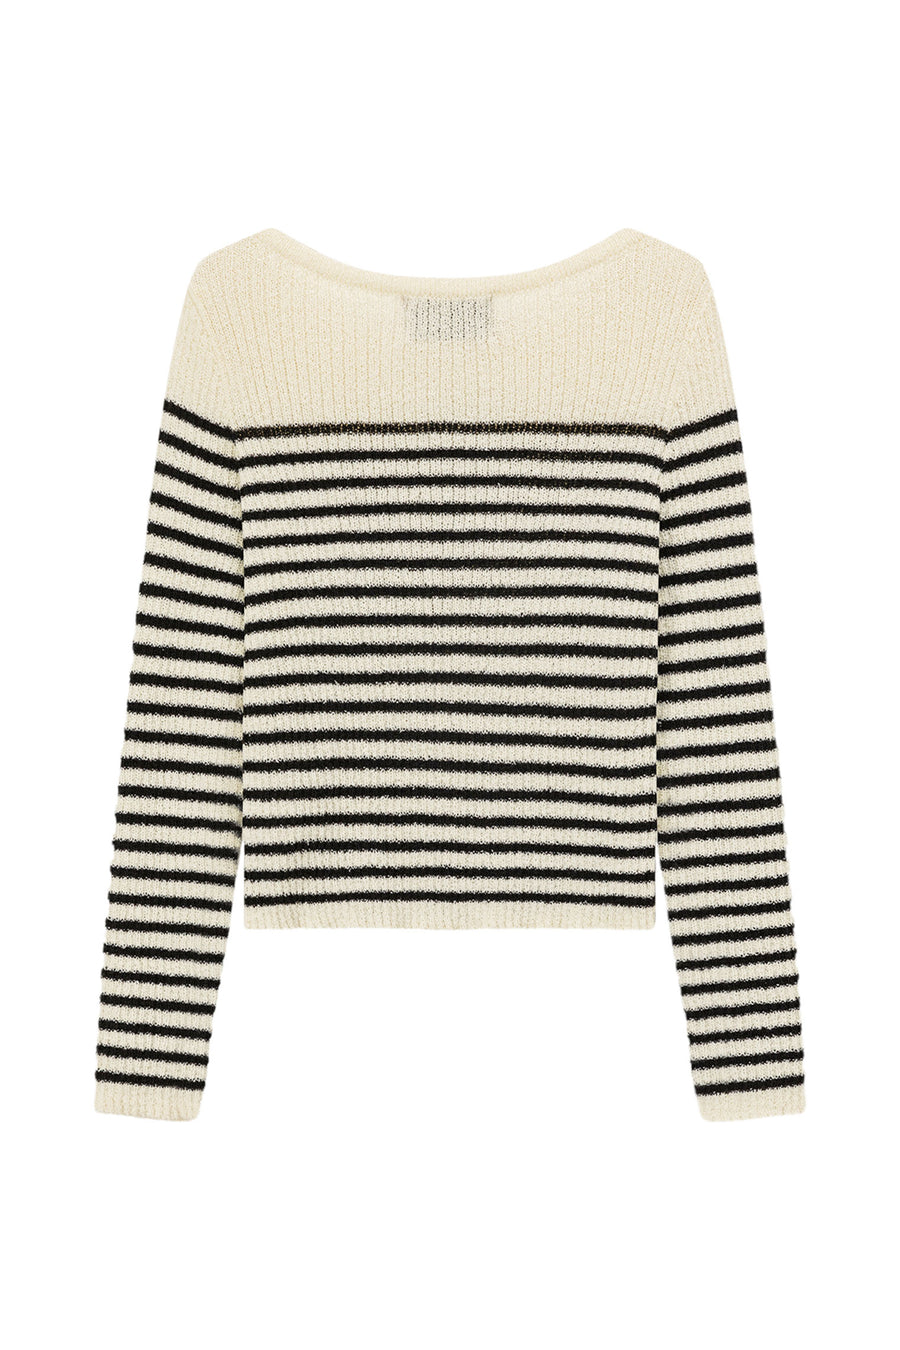 CHUU Simple Stripe Knit Sweater